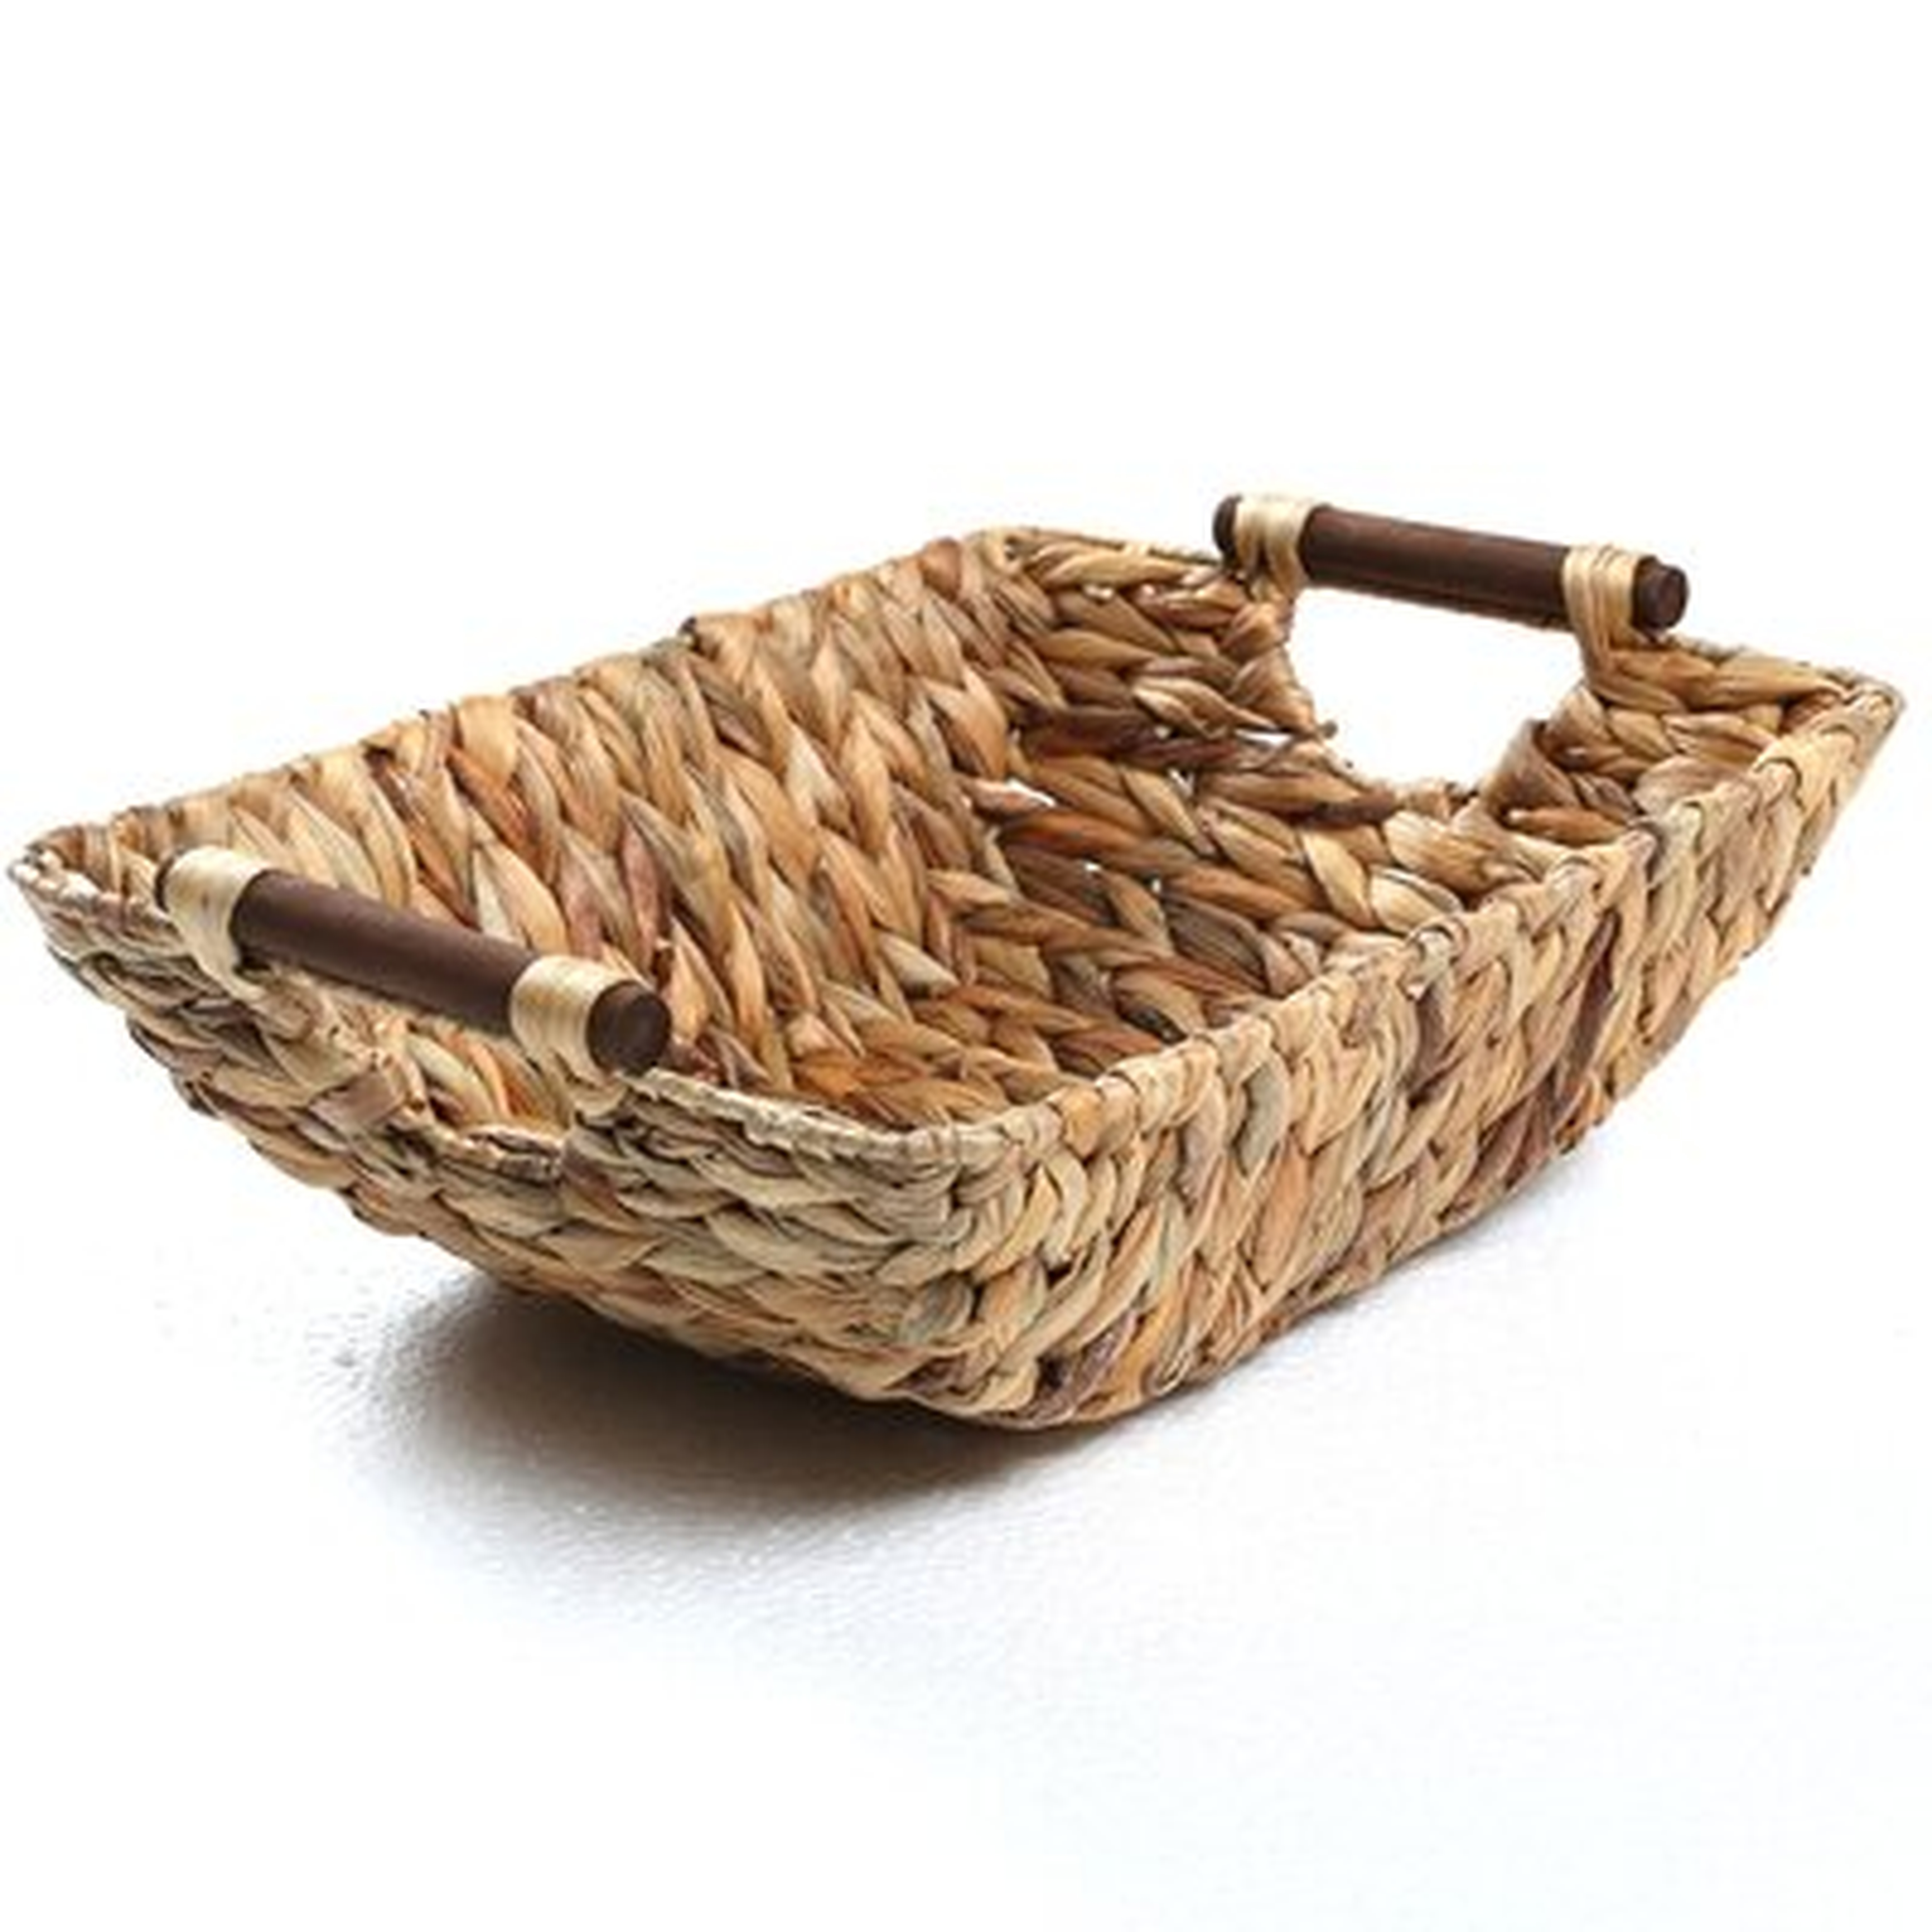 Hyacinth and Wood Handled Wicker Basket - Wayfair